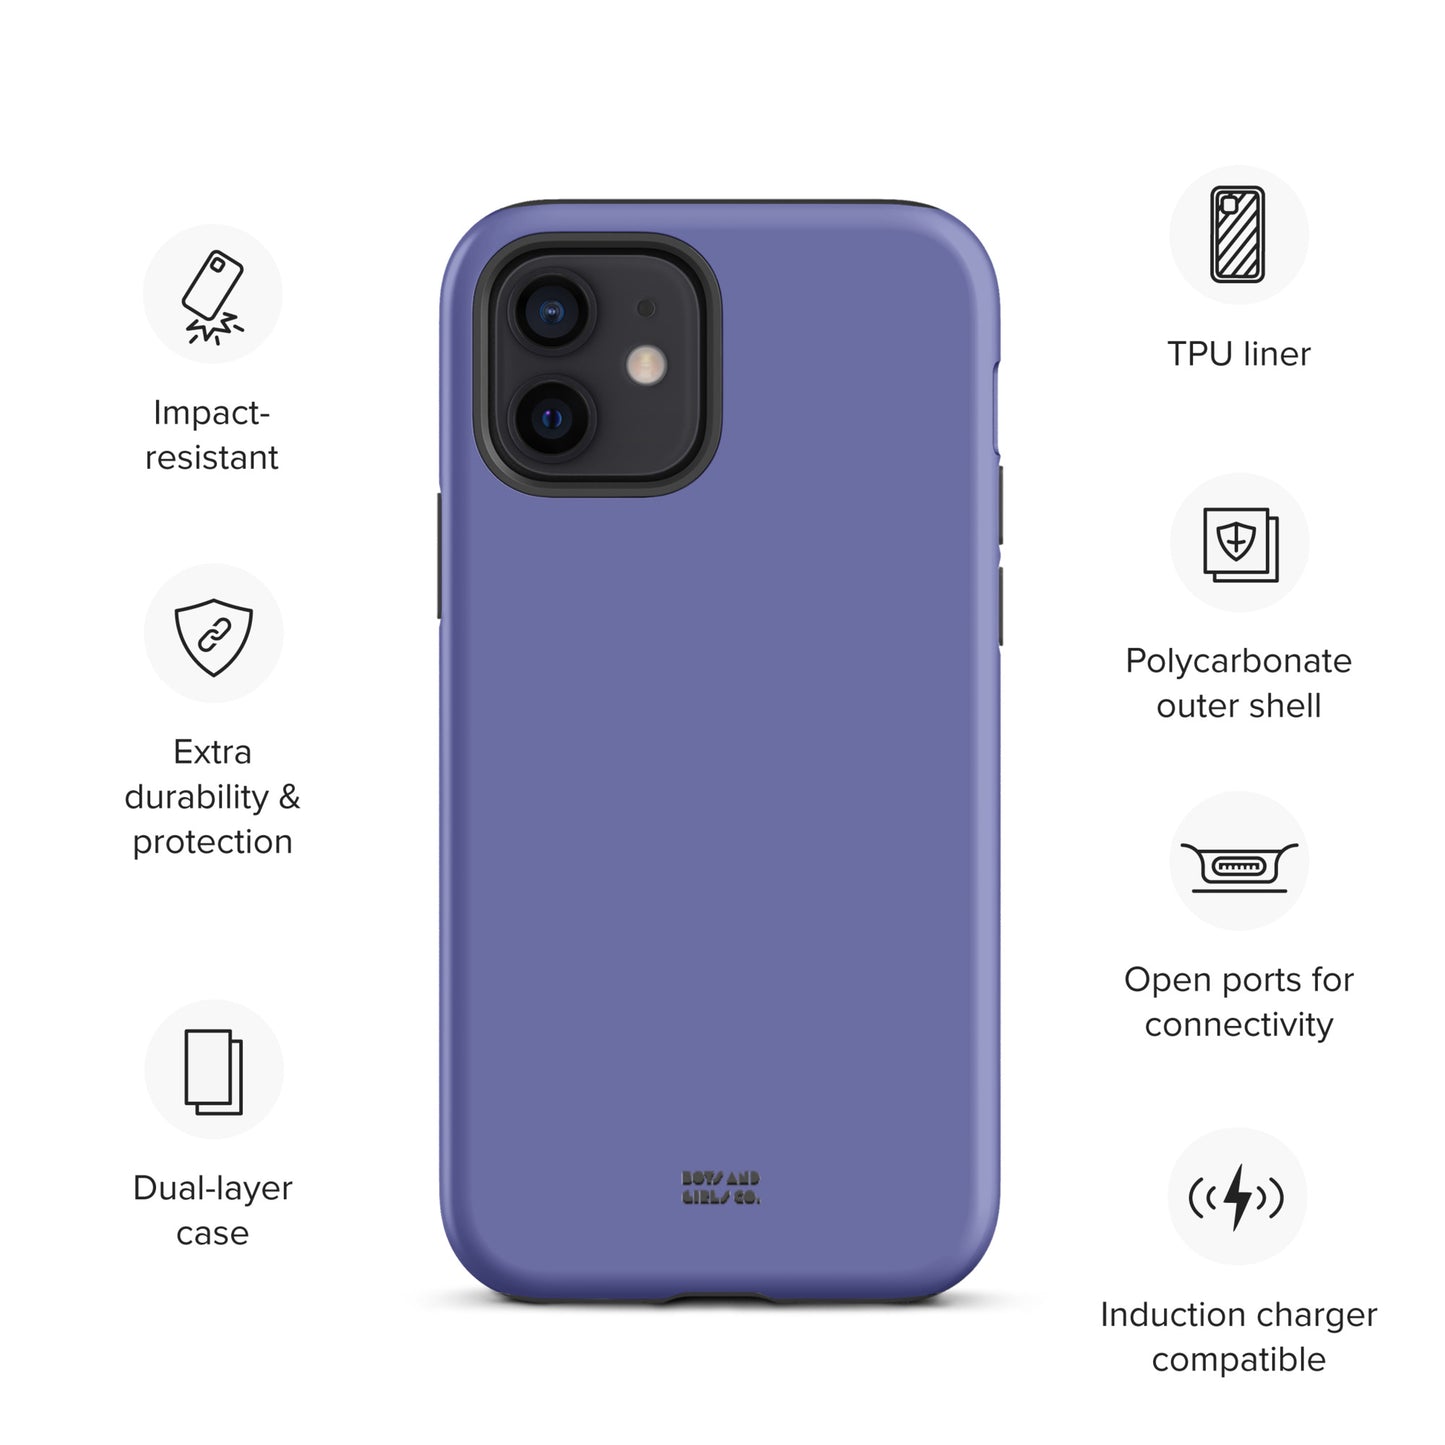 UBE - Tough iPhone case